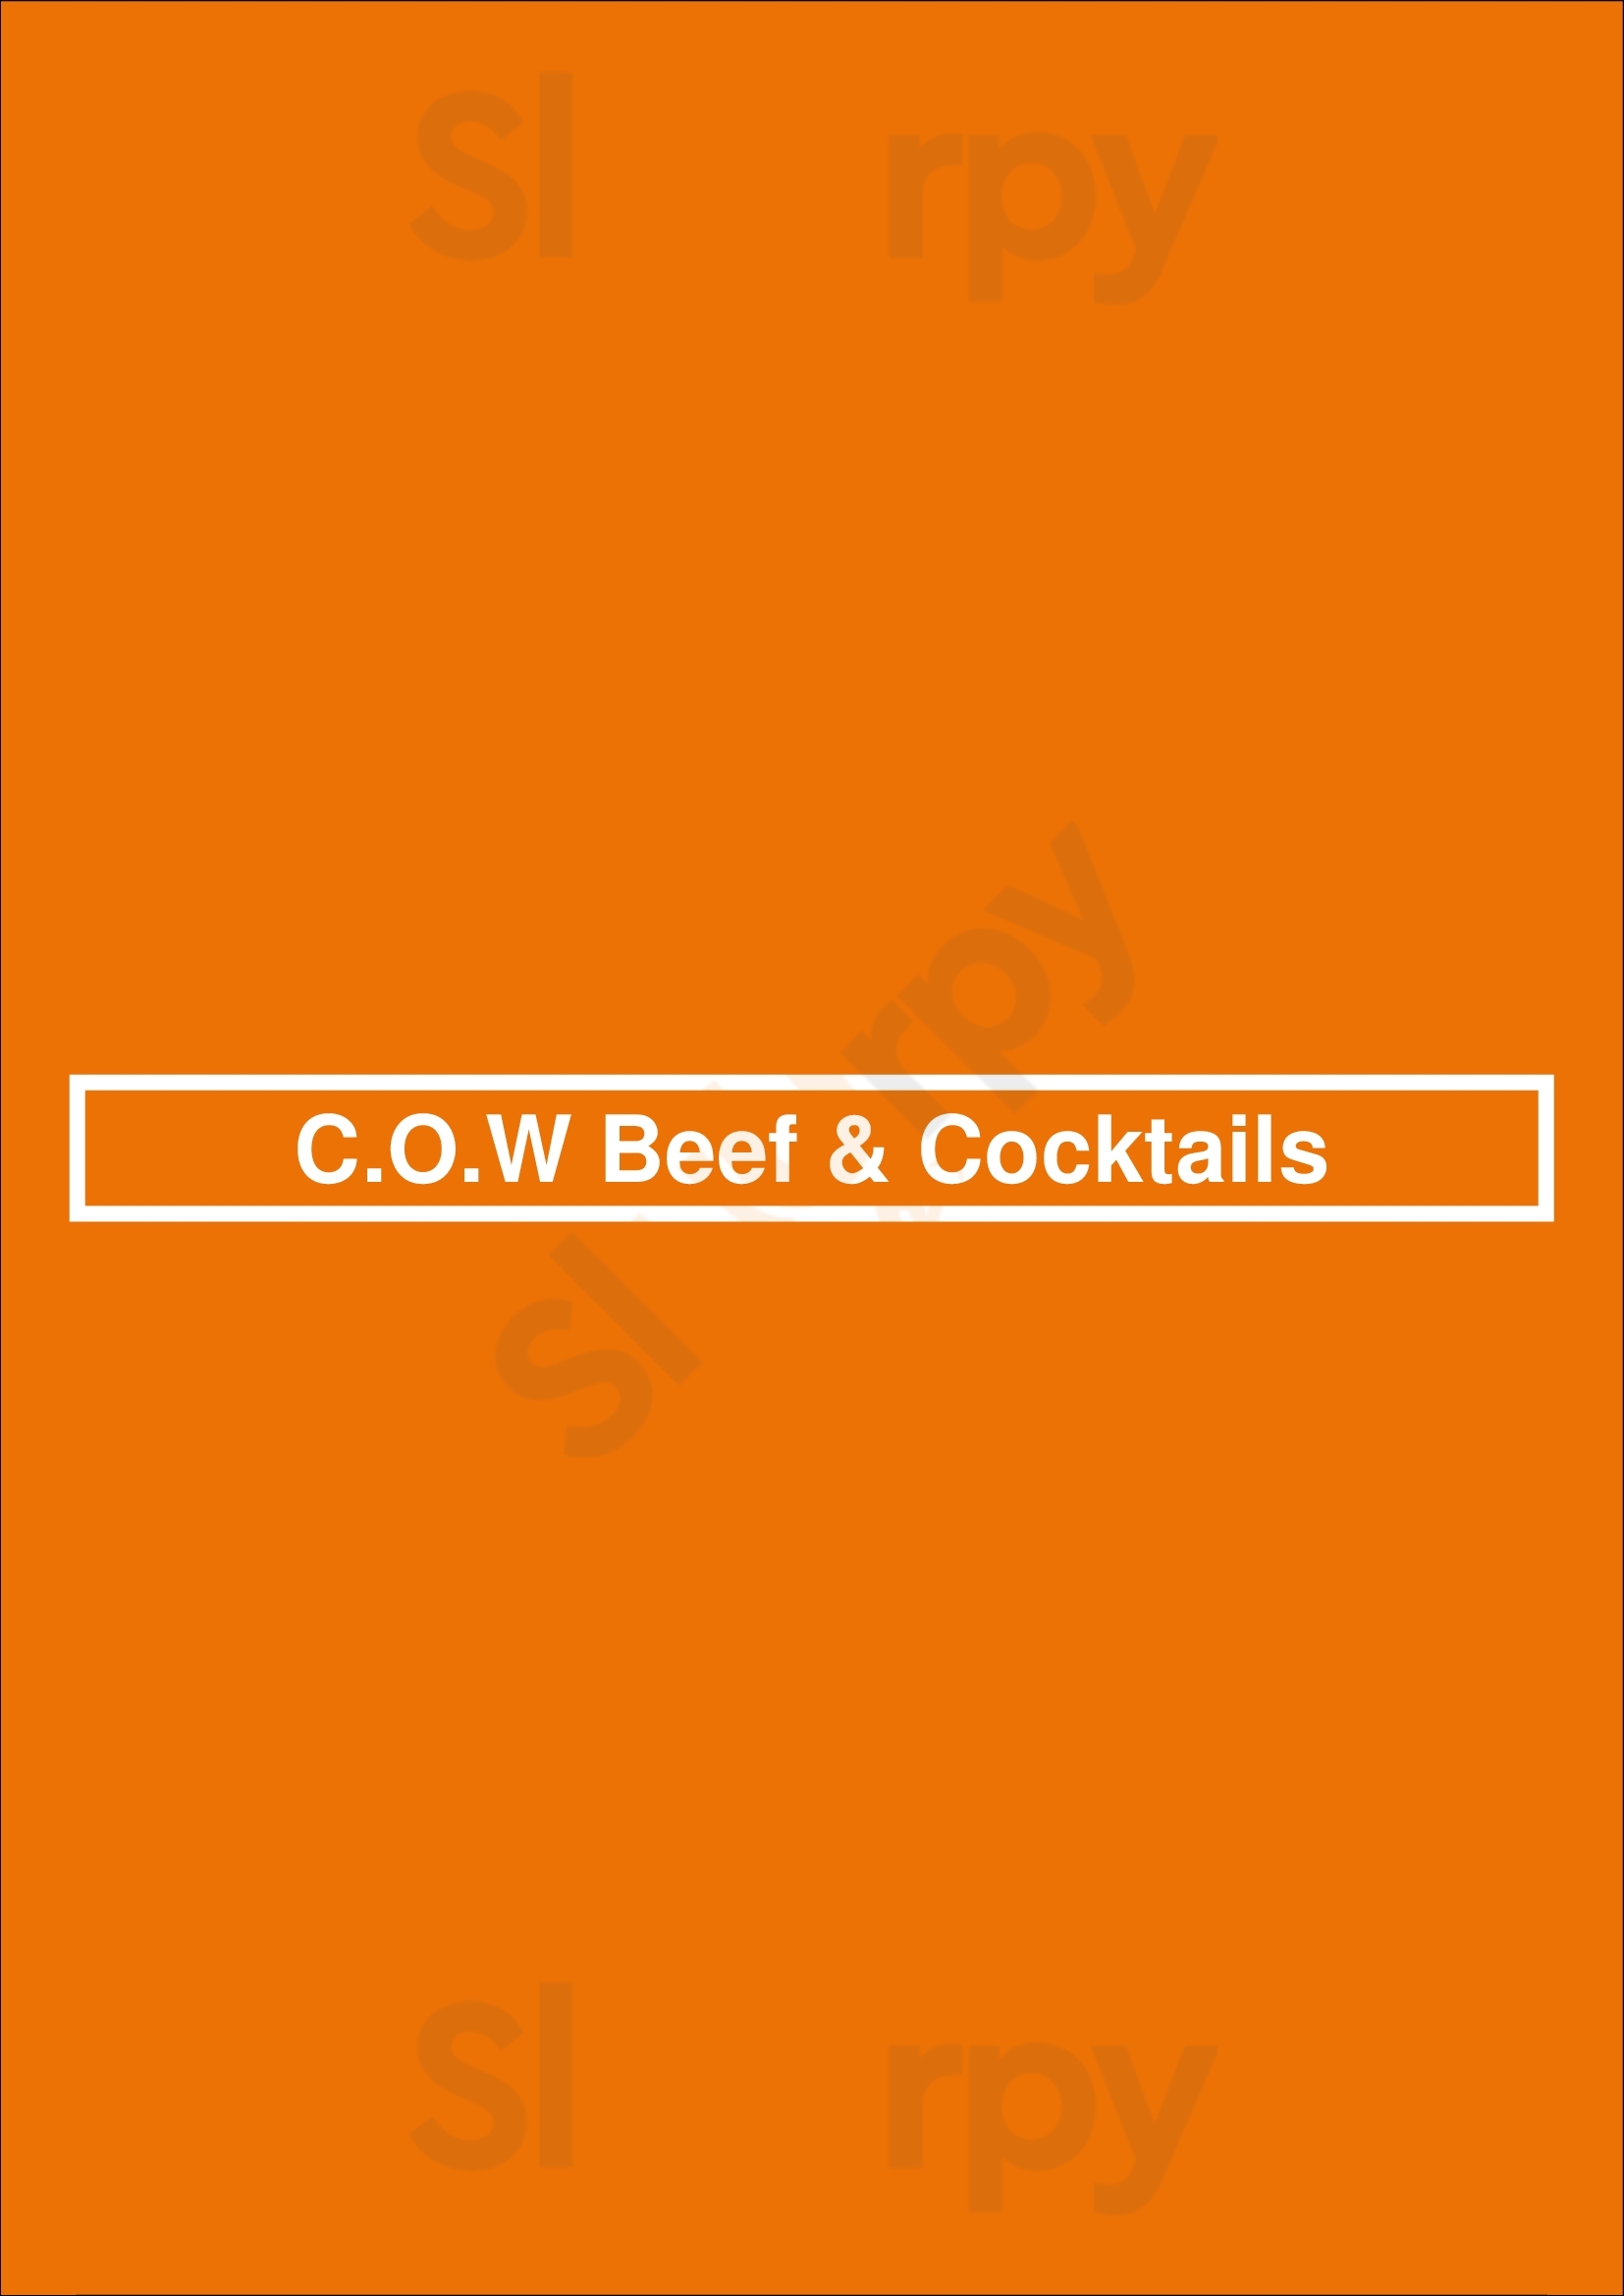 C.o.w Beef & Cocktails Lisboa Menu - 1